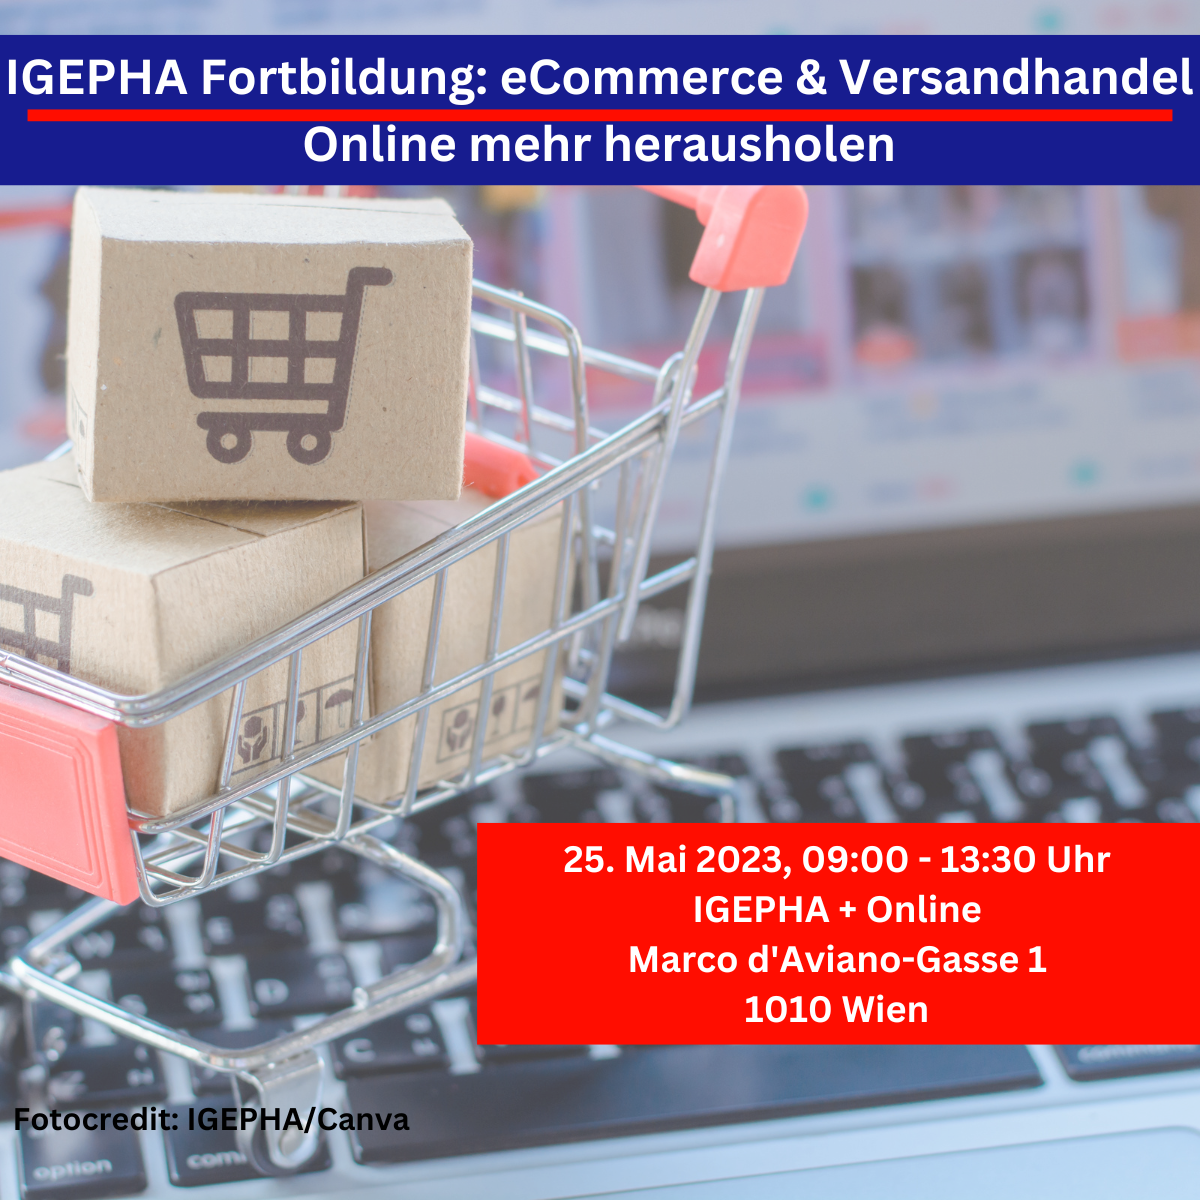 IGEPHA Fortbildung eCommerce & Versandhandel